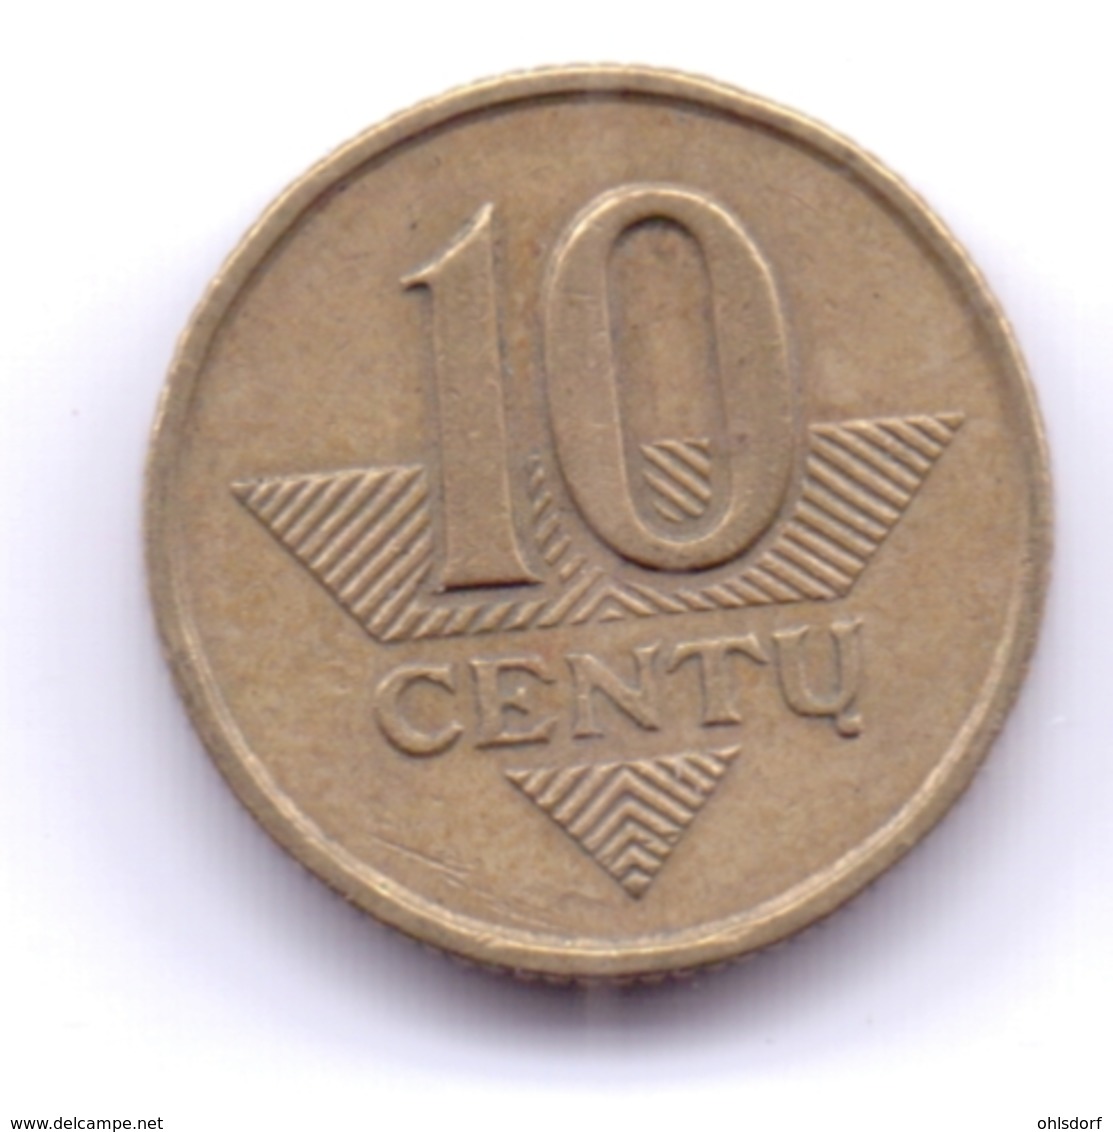 LIETUVA 1997: 10 Centu, KM 106 - Lithuania